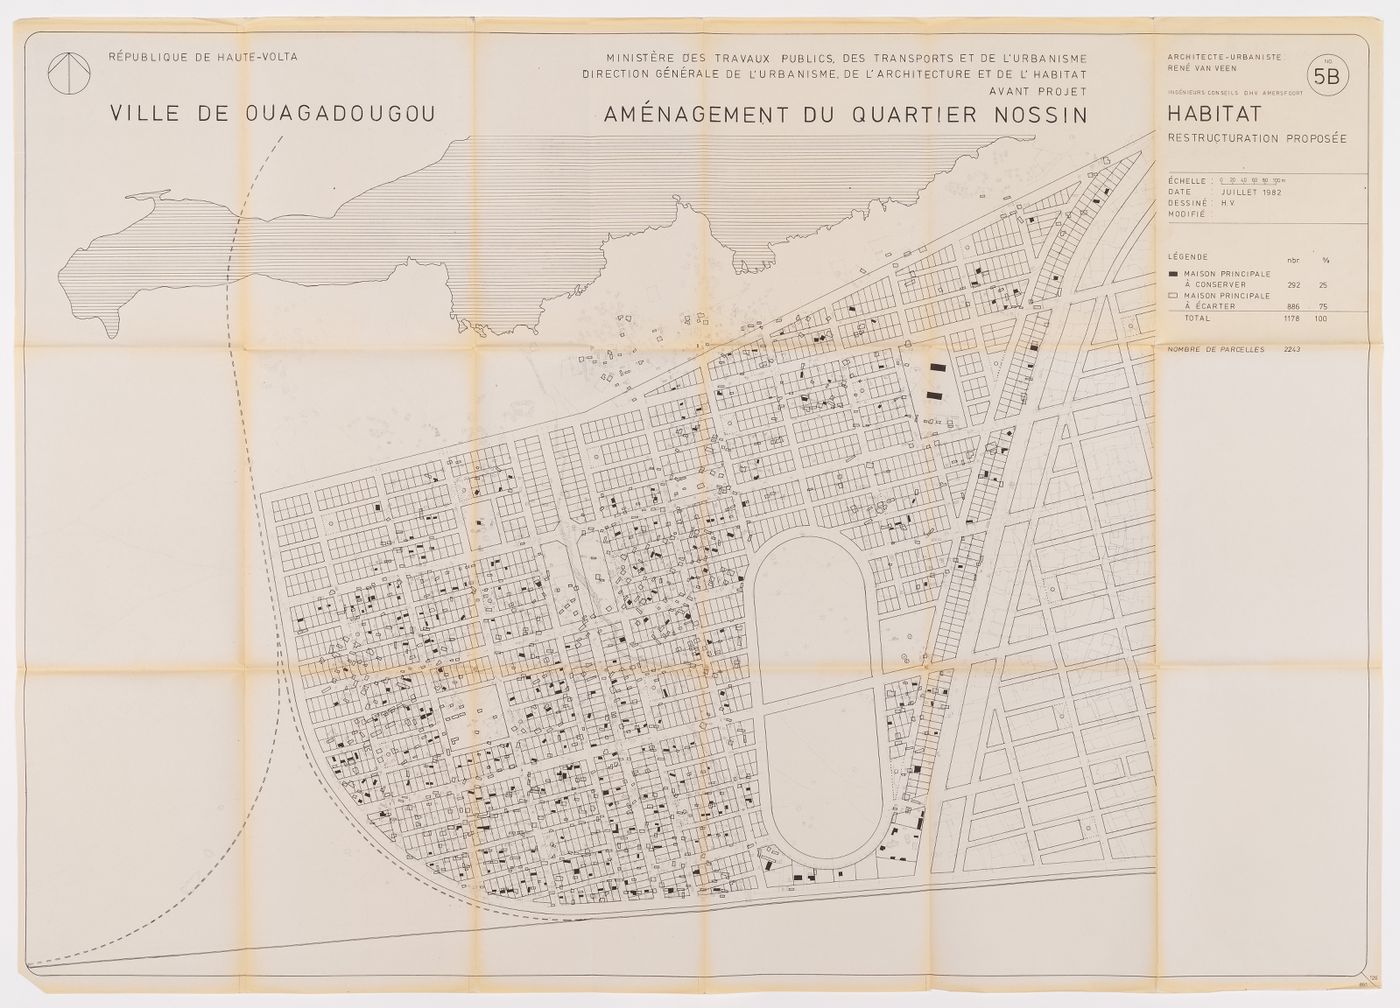 Map of proposed restructuring by René Van Veen for Nossin neighbourhood, Ouagadougou, Burkina Faso